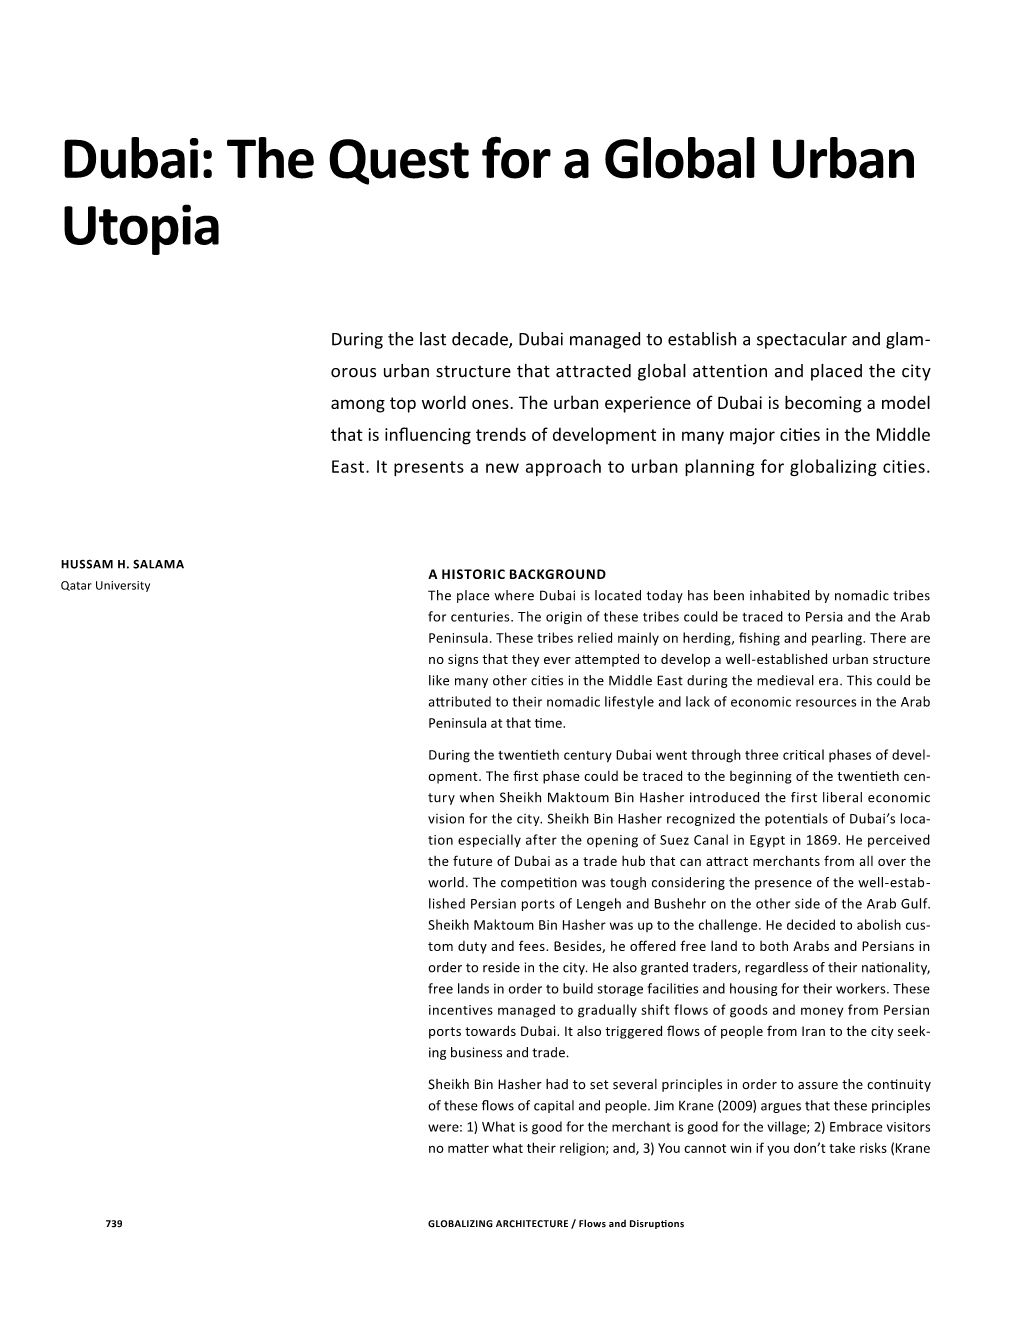 Dubai: the Quest for a Global Urban Utopia